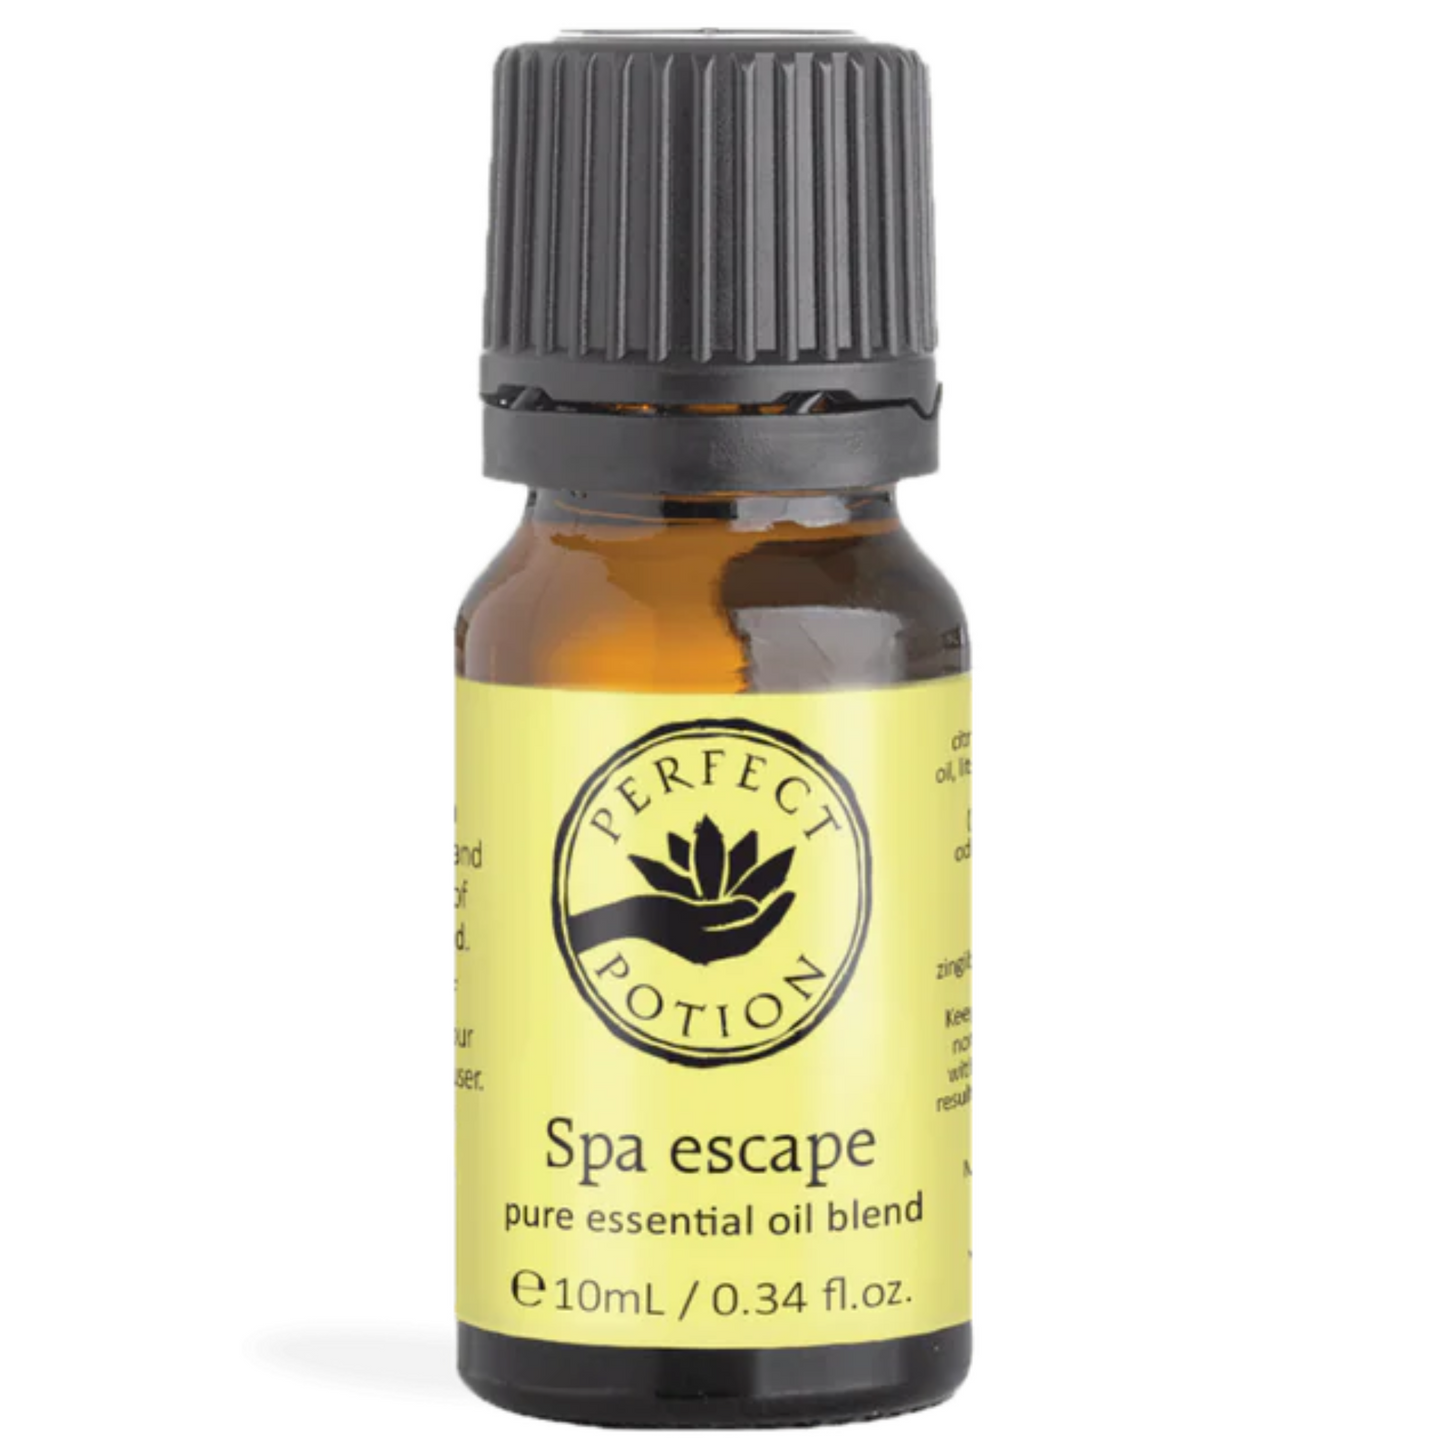 Spa Escape Essential Oil Blend